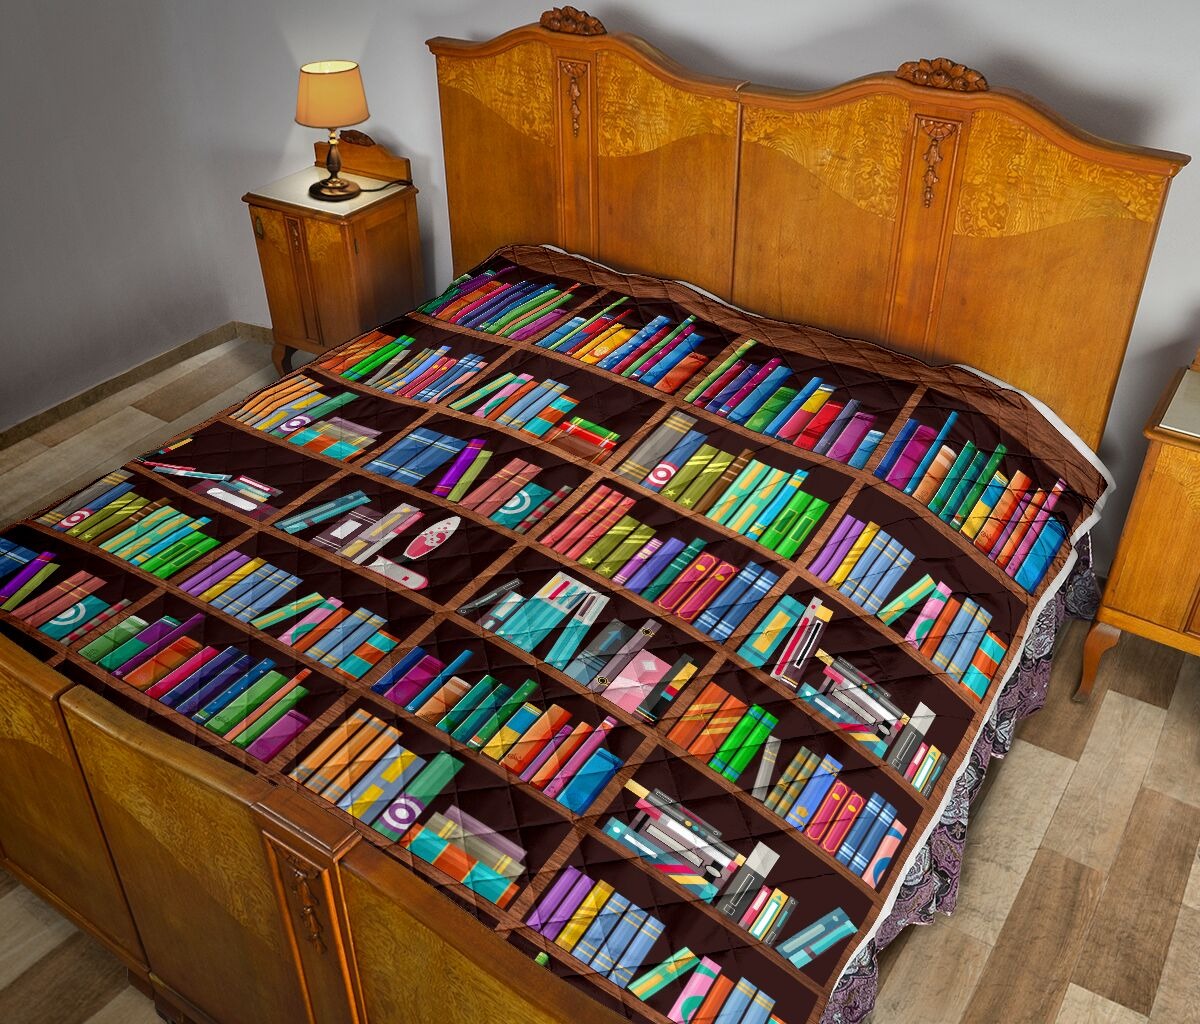 Bookshelf classic quilt blanket – Hothot 271020